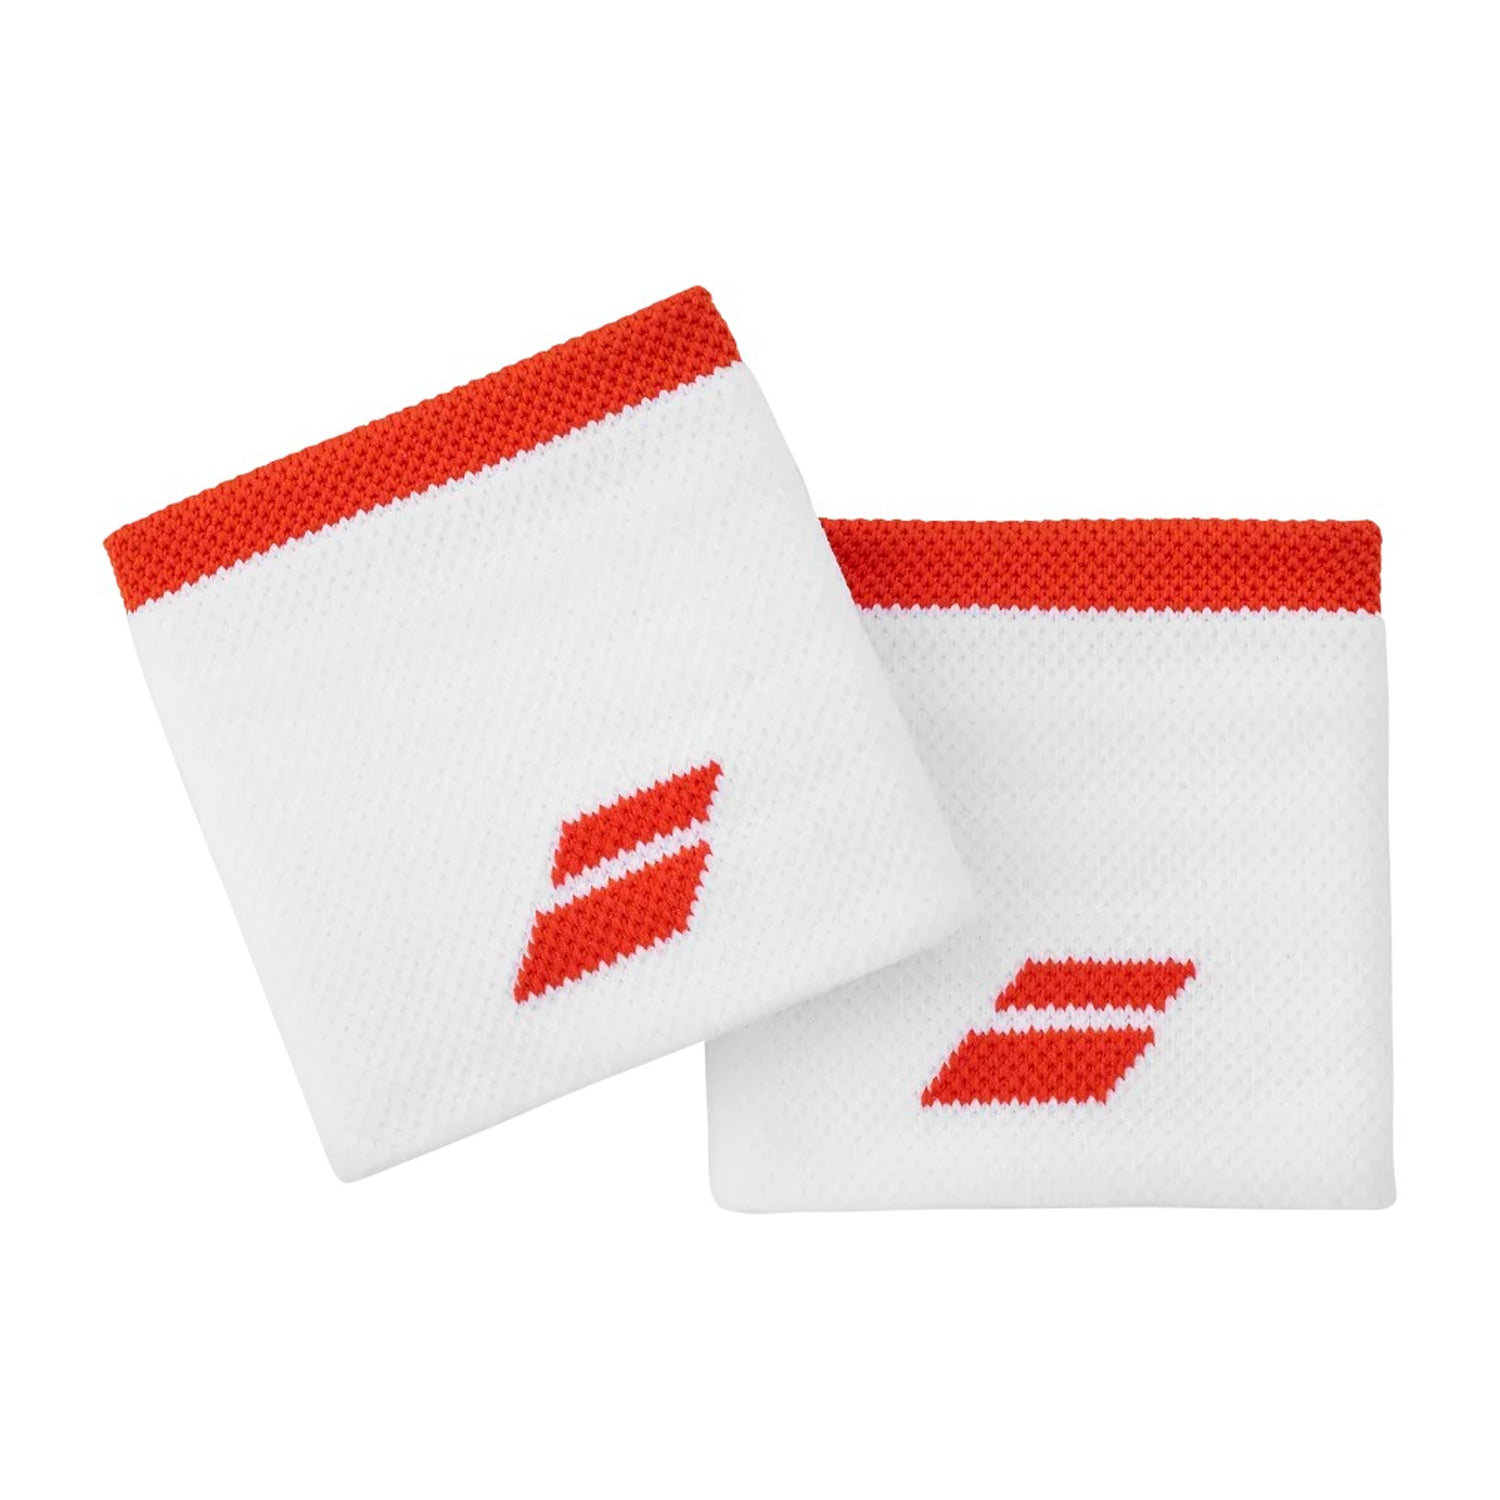 Babolat 182915 Logo Wrist Band - White/Fiesta Red - Best Price online Prokicksports.com